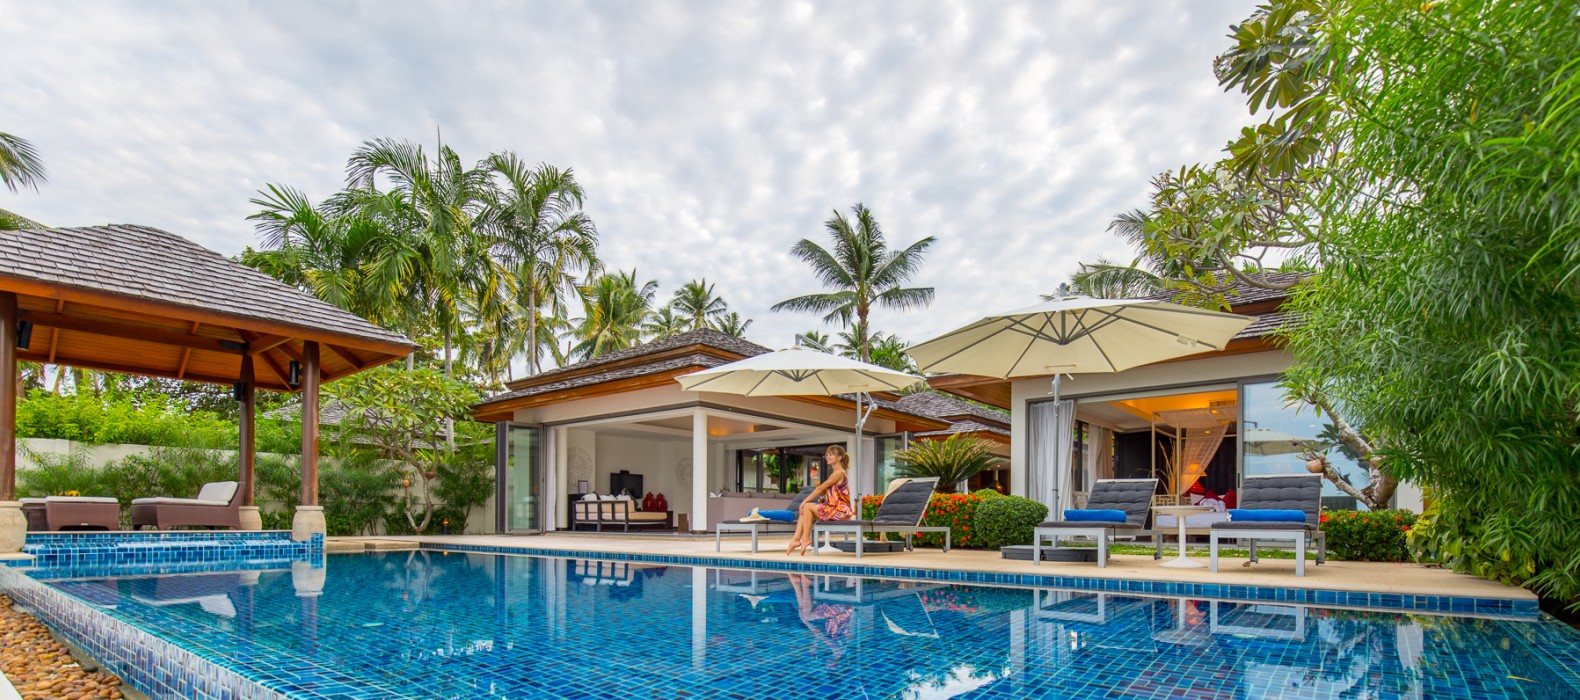 Exterior pool of Villa Samui Love in Koh Samui